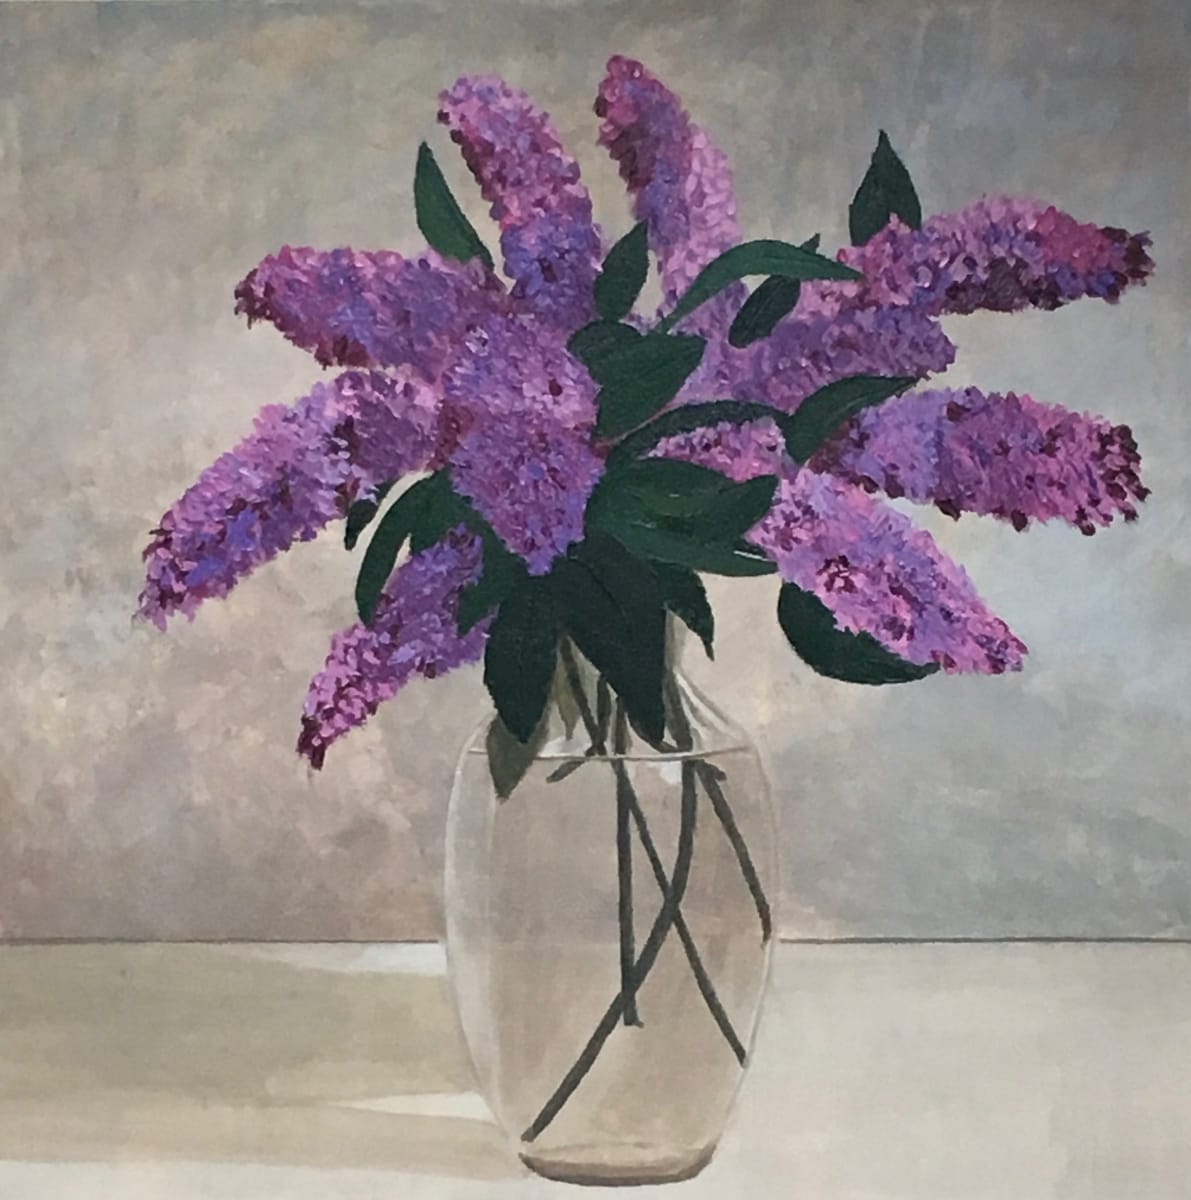 Katie's Lilacs  Image: acrylic on canvas